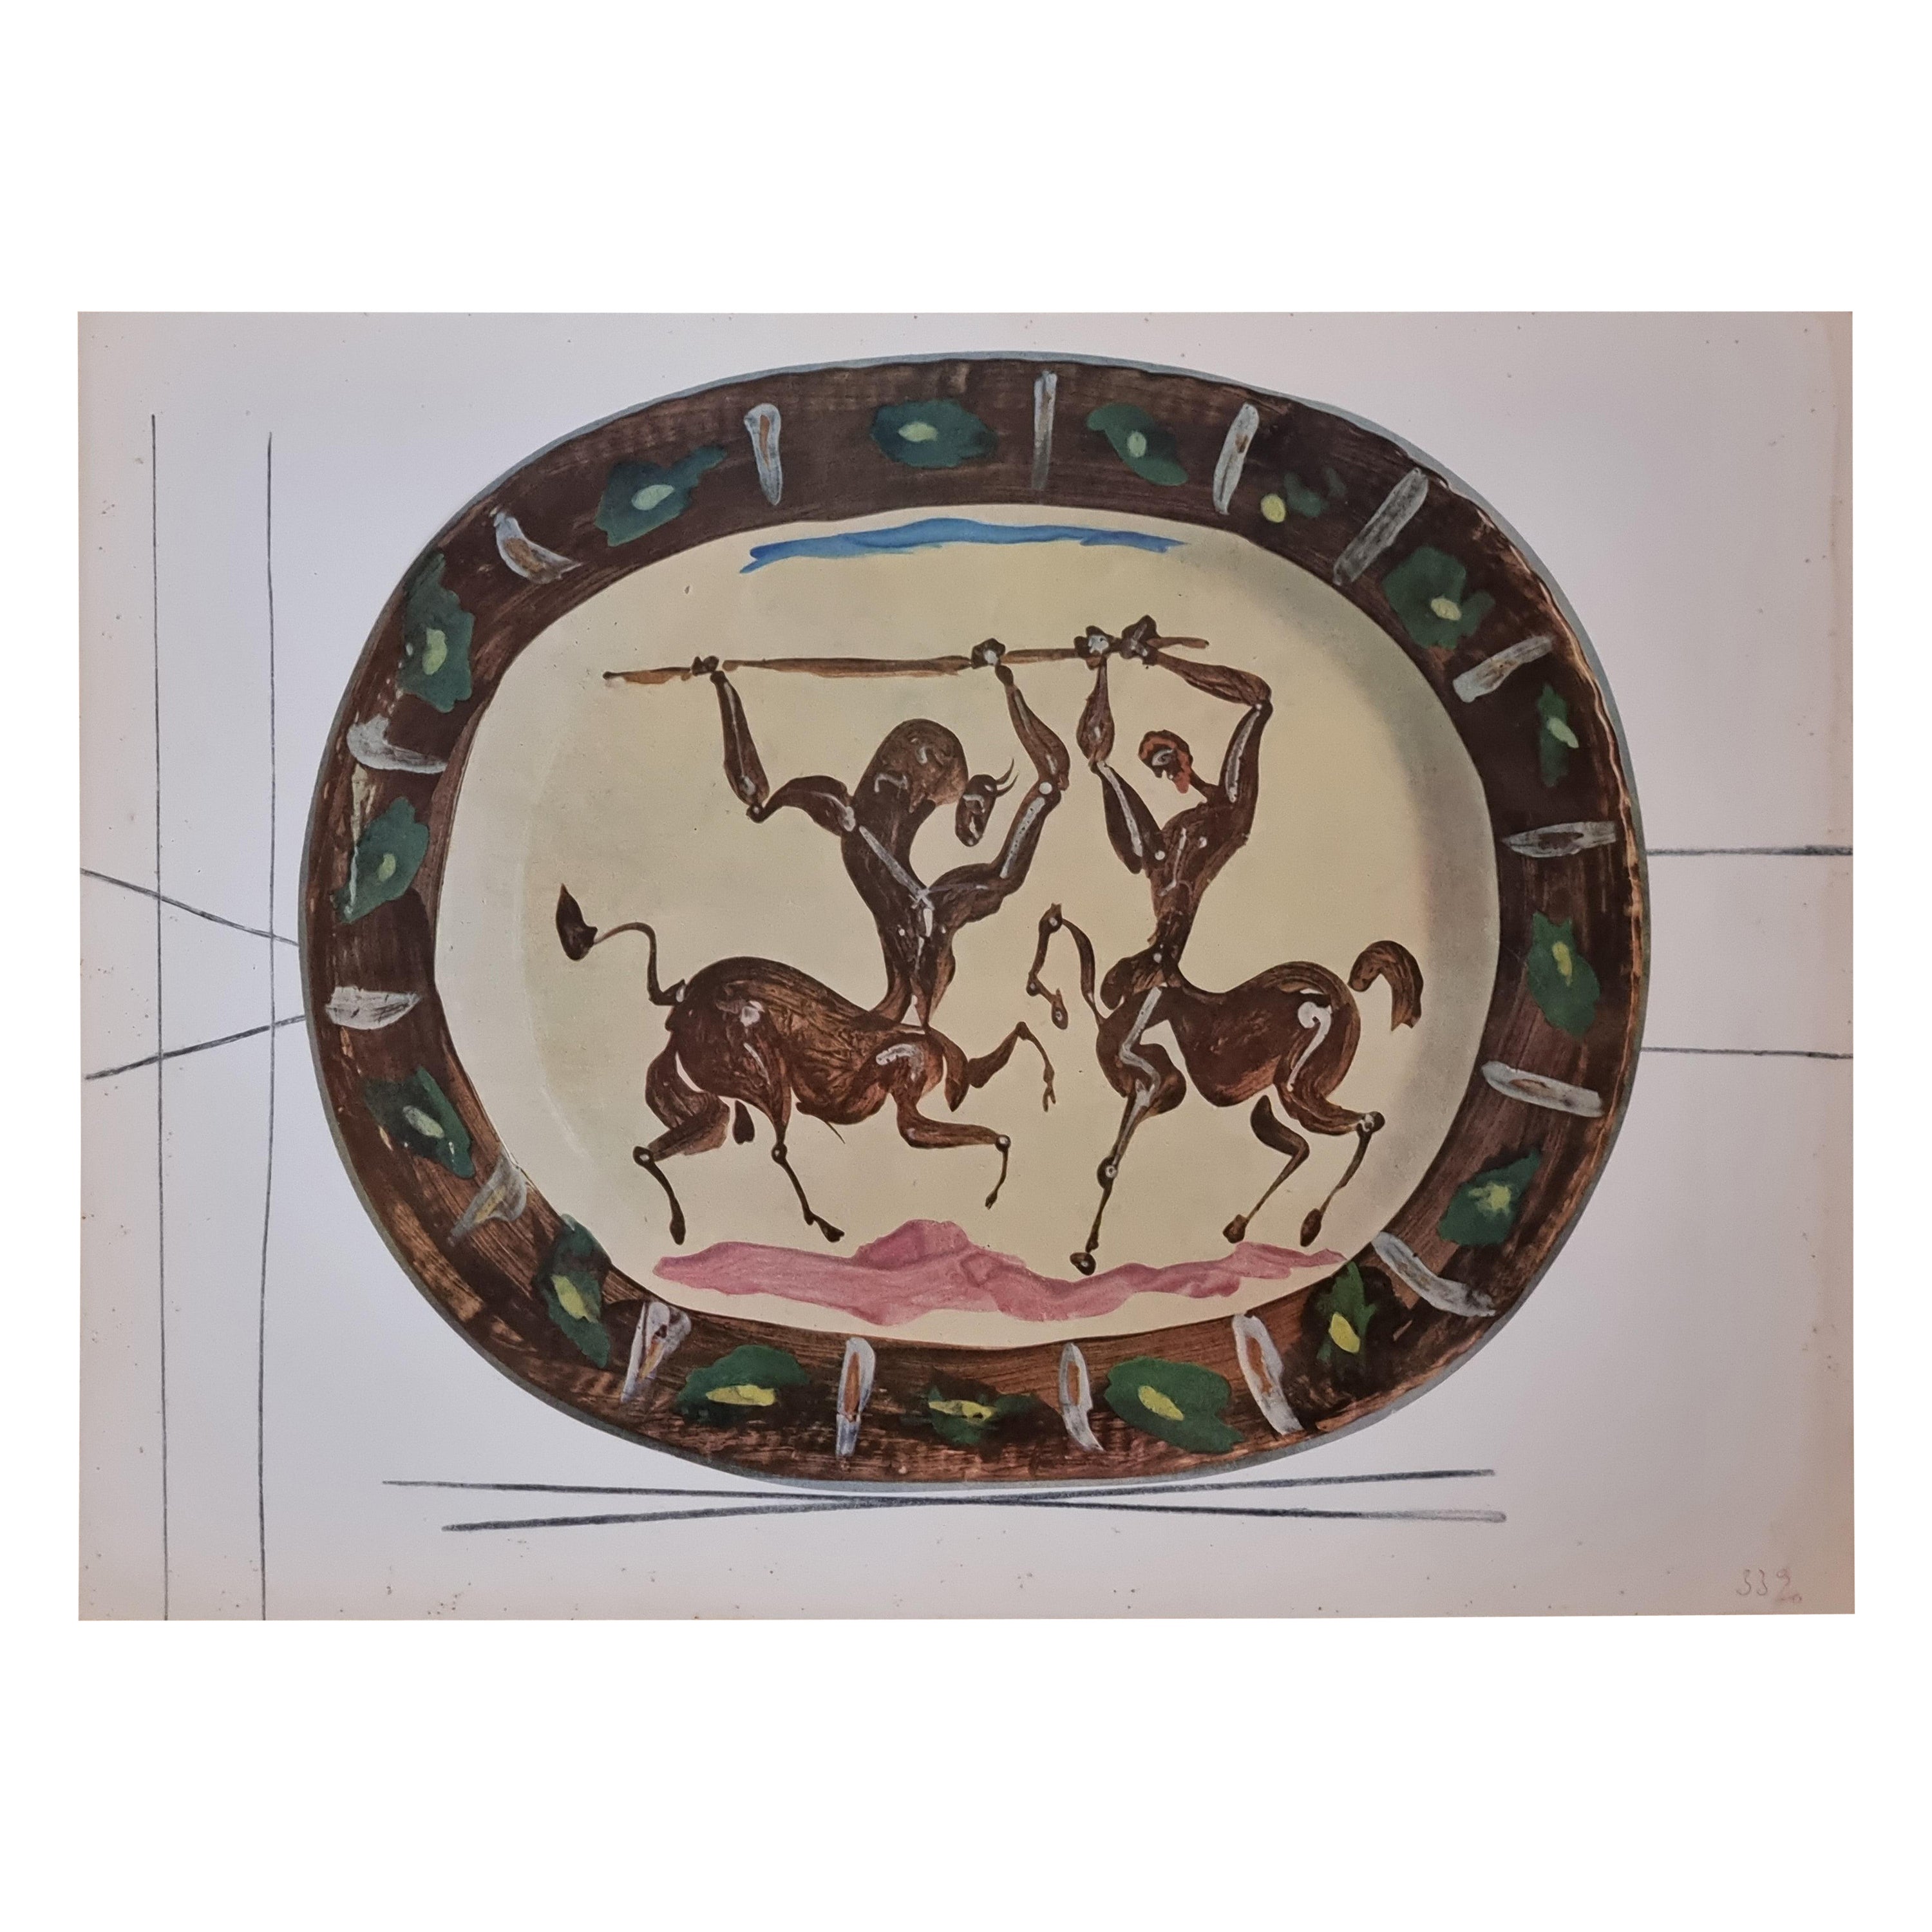 Albert Skira Print of battle of Centaurs, Ceramic Plate, "Céramiques De Picasso"